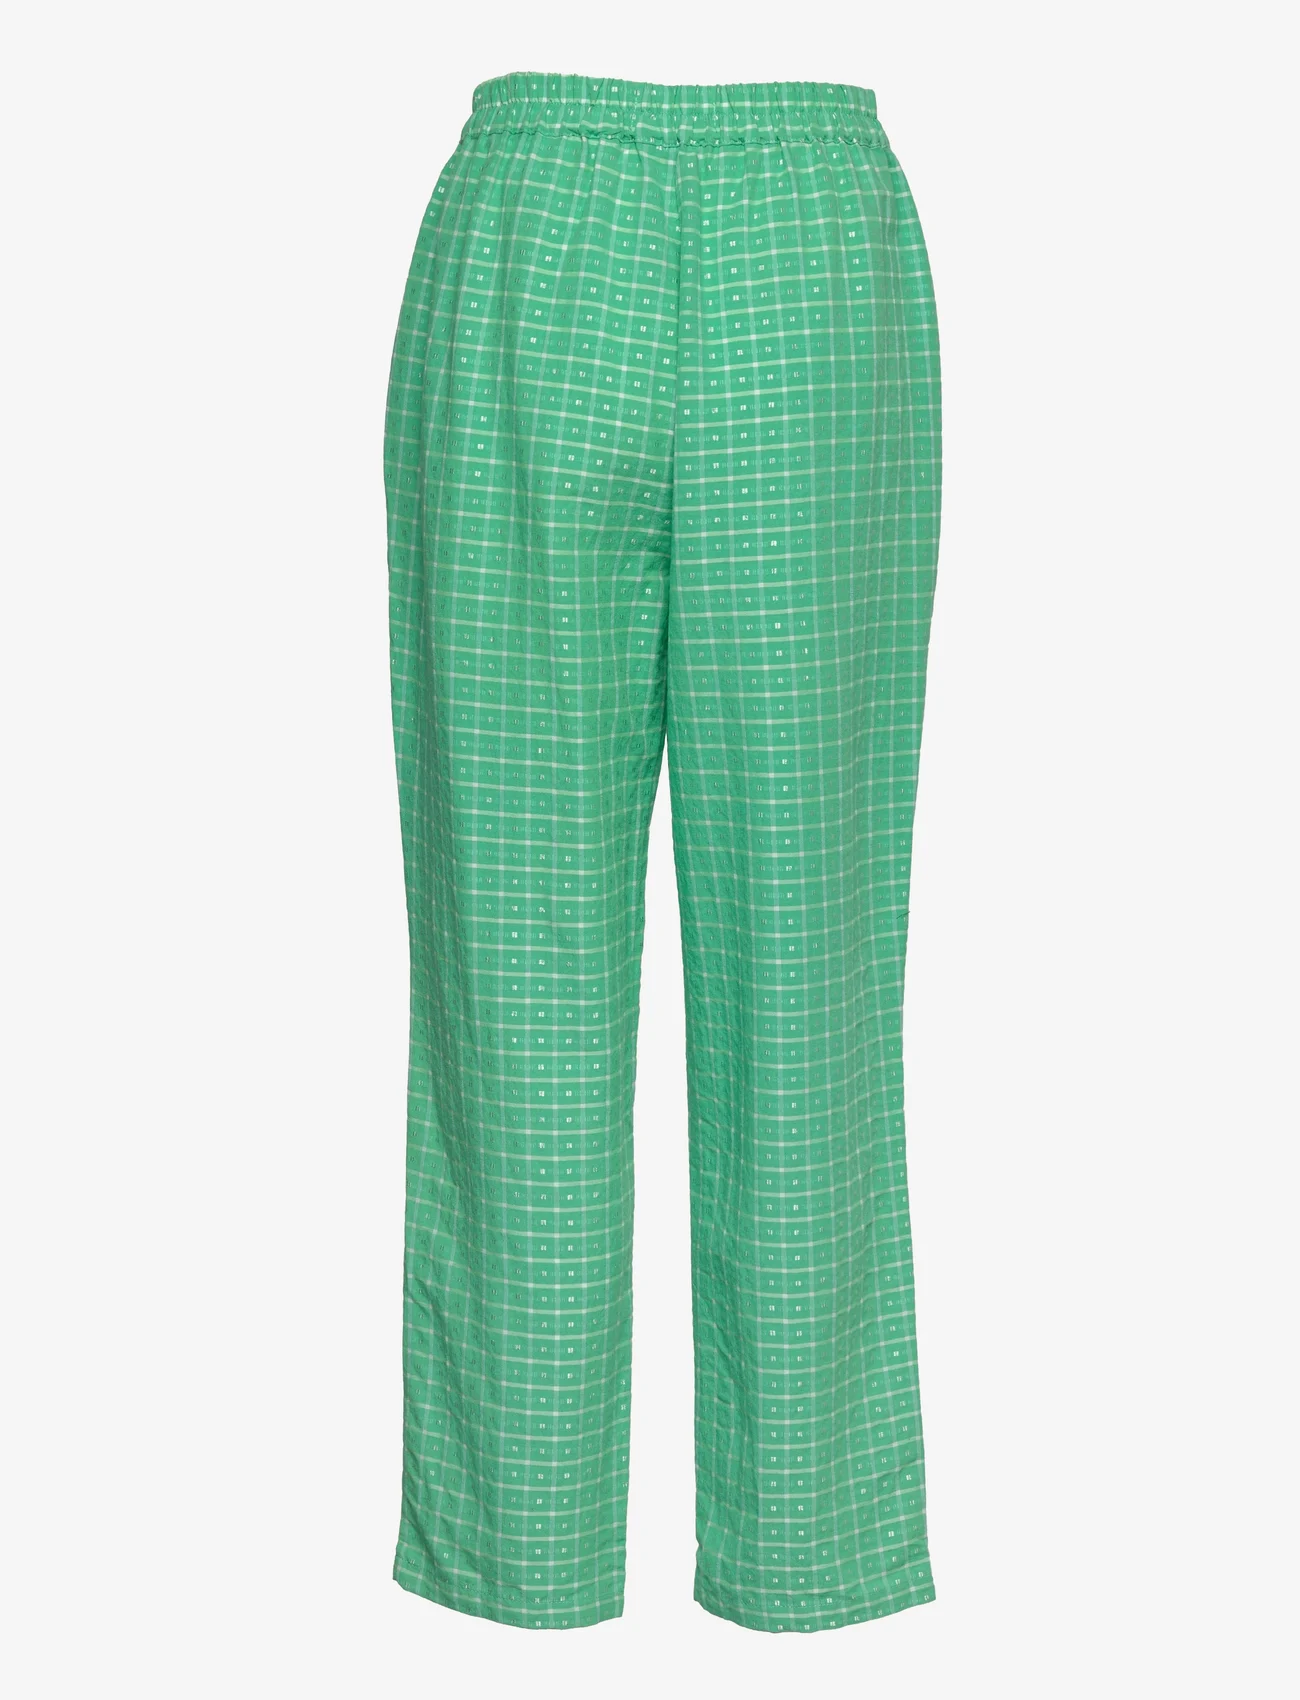 Lollys Laundry - Bill Pants - straight leg trousers - green - 1